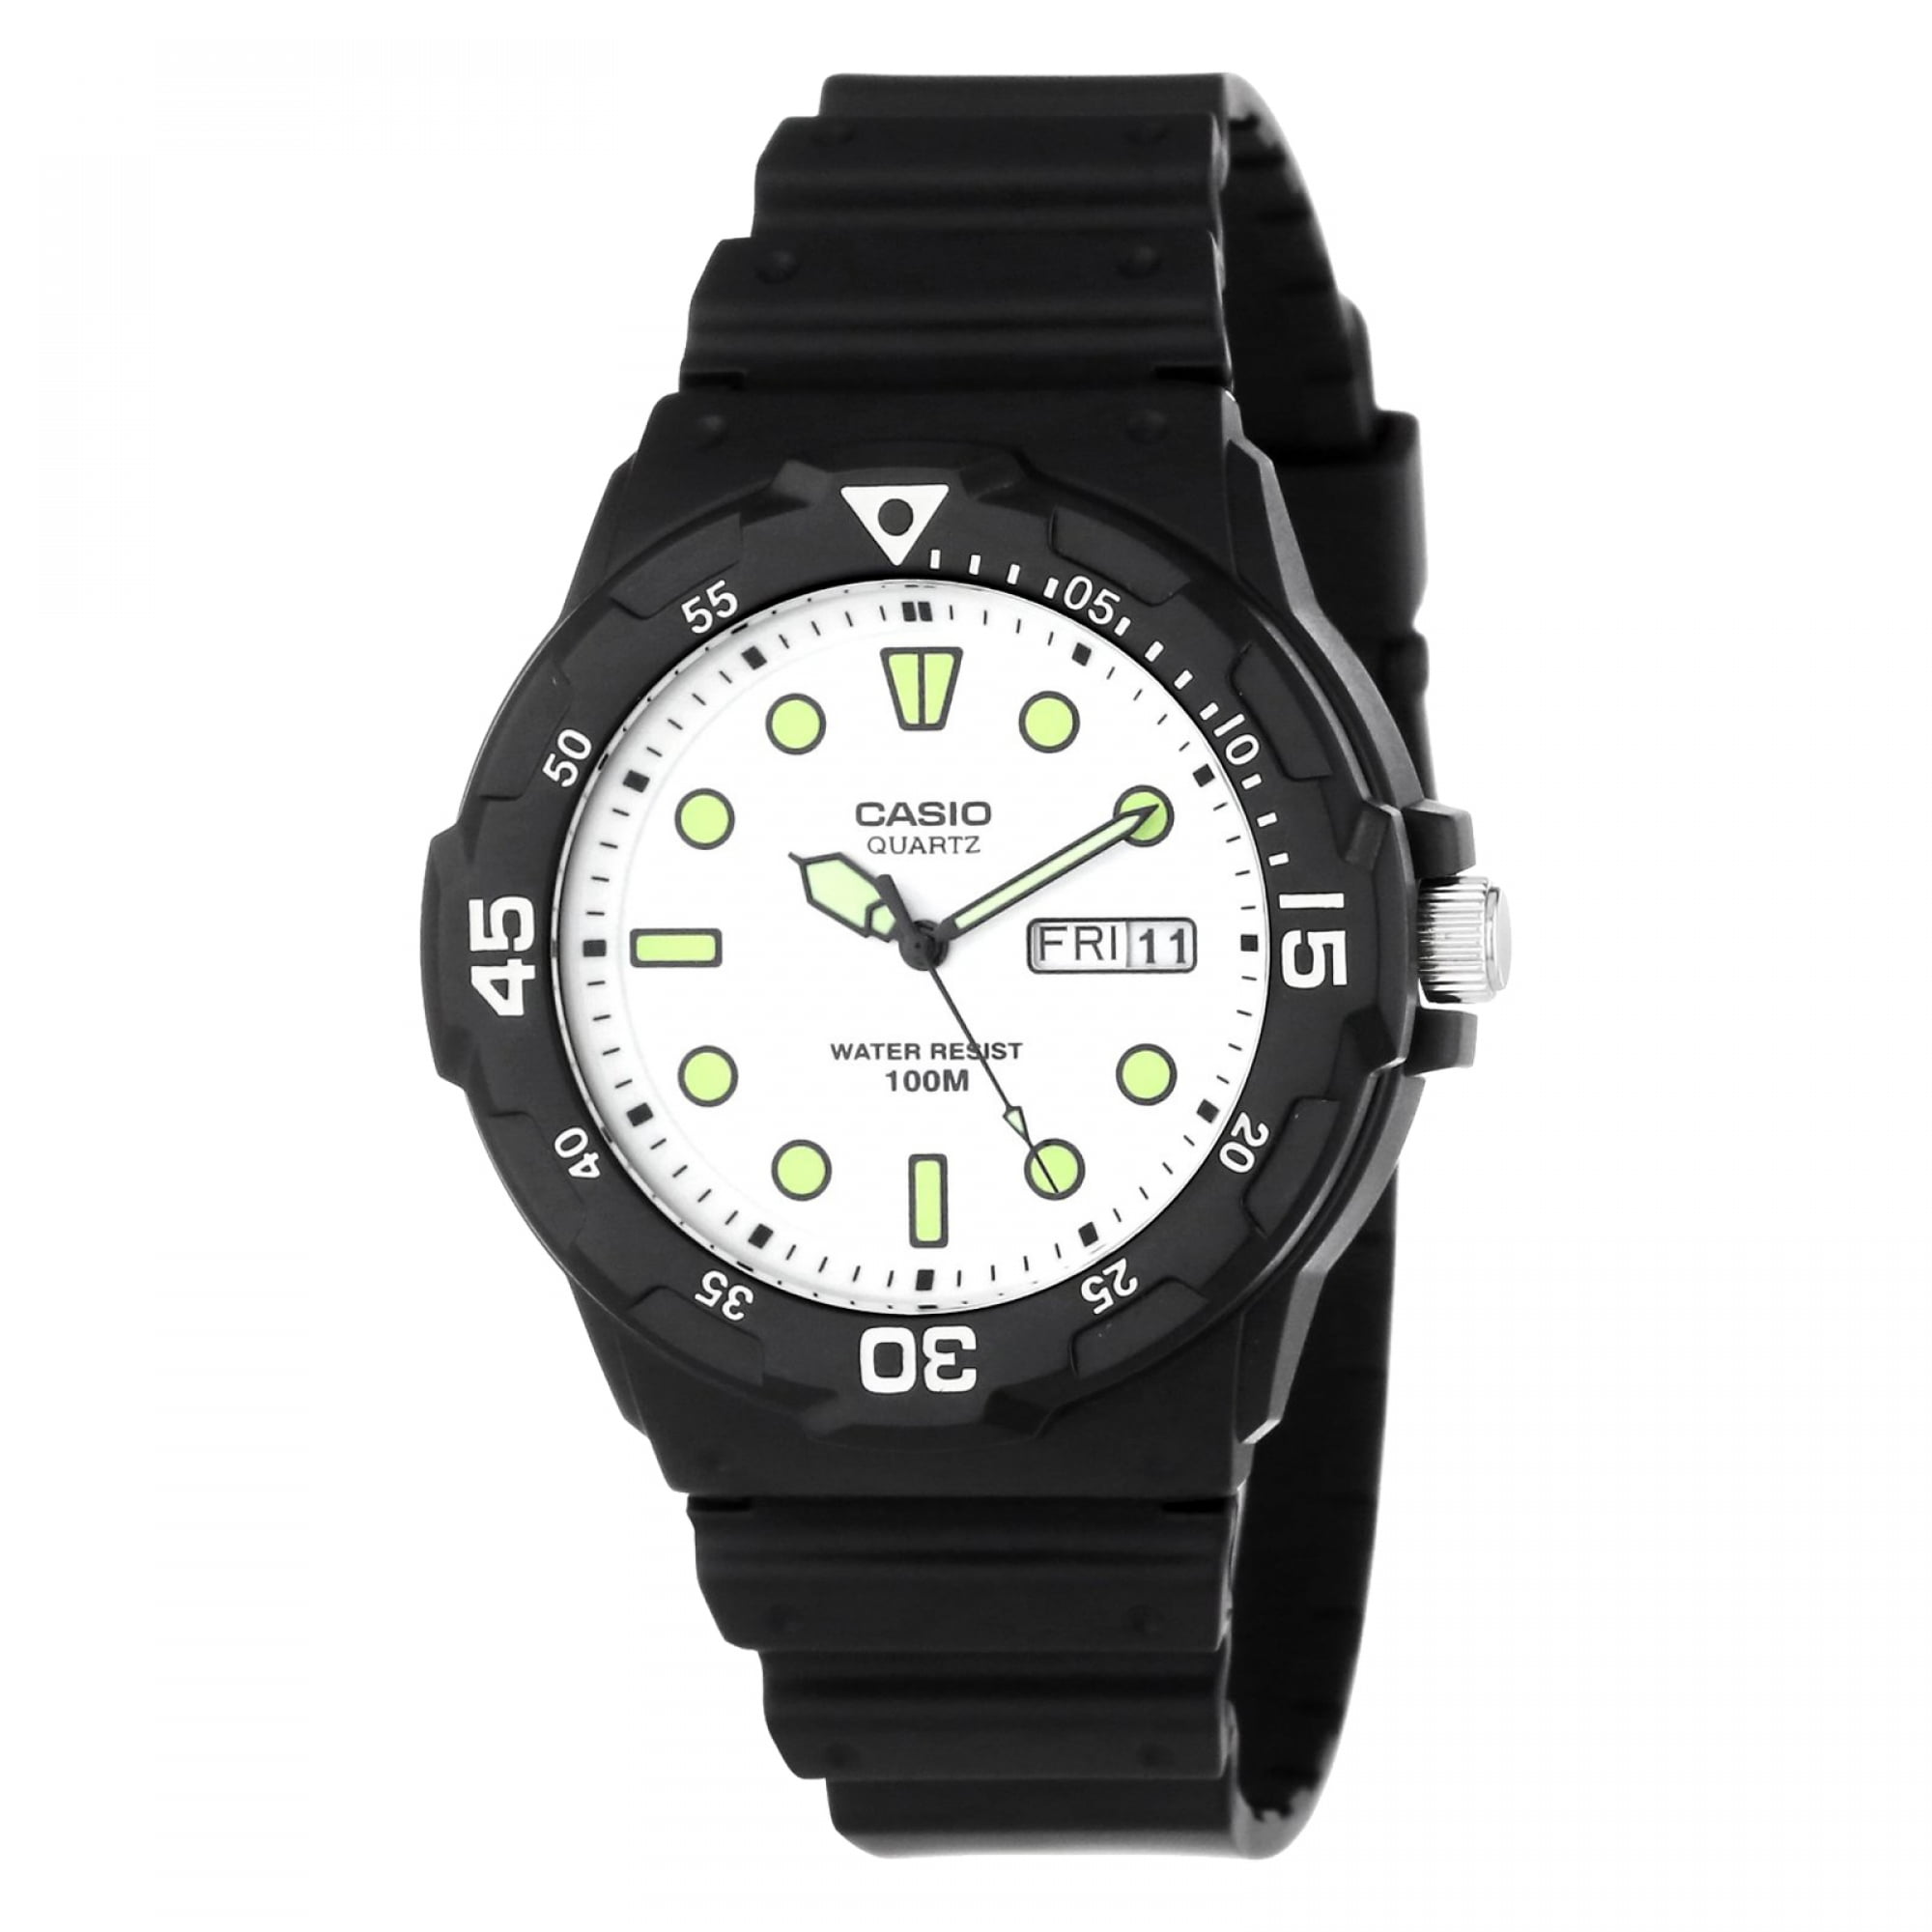 Casio - Men's Analog Dive-Style Watch, Black Resin - Walmart.com